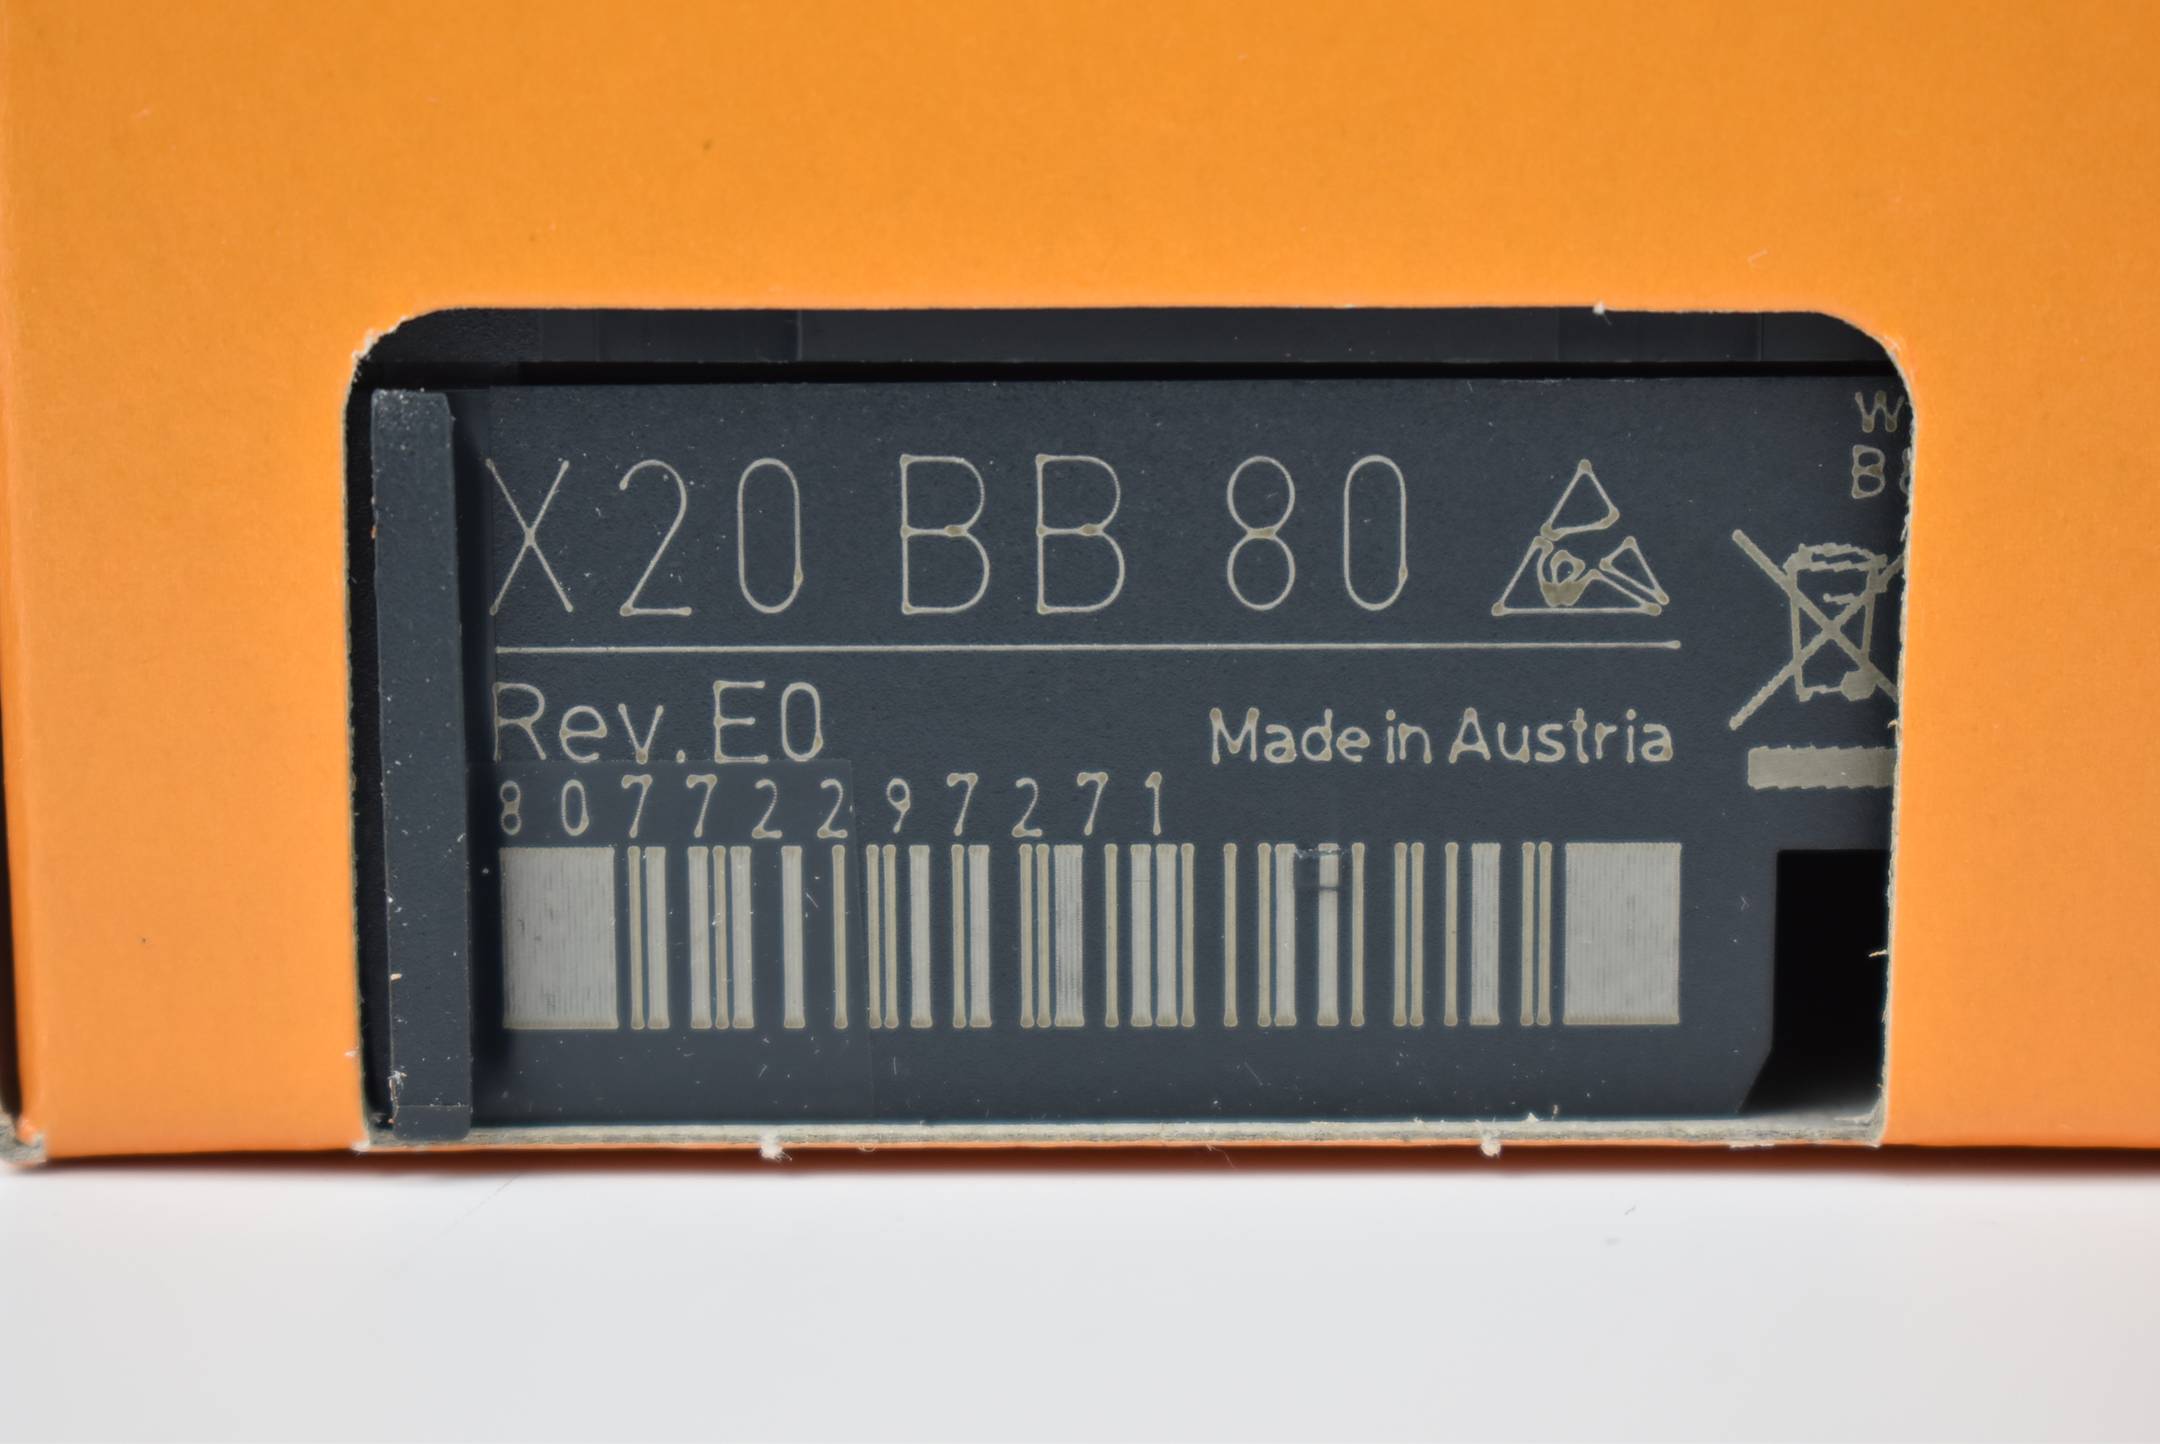 B&R X20 BB 80 ( X20BB80 ) Rev. E0